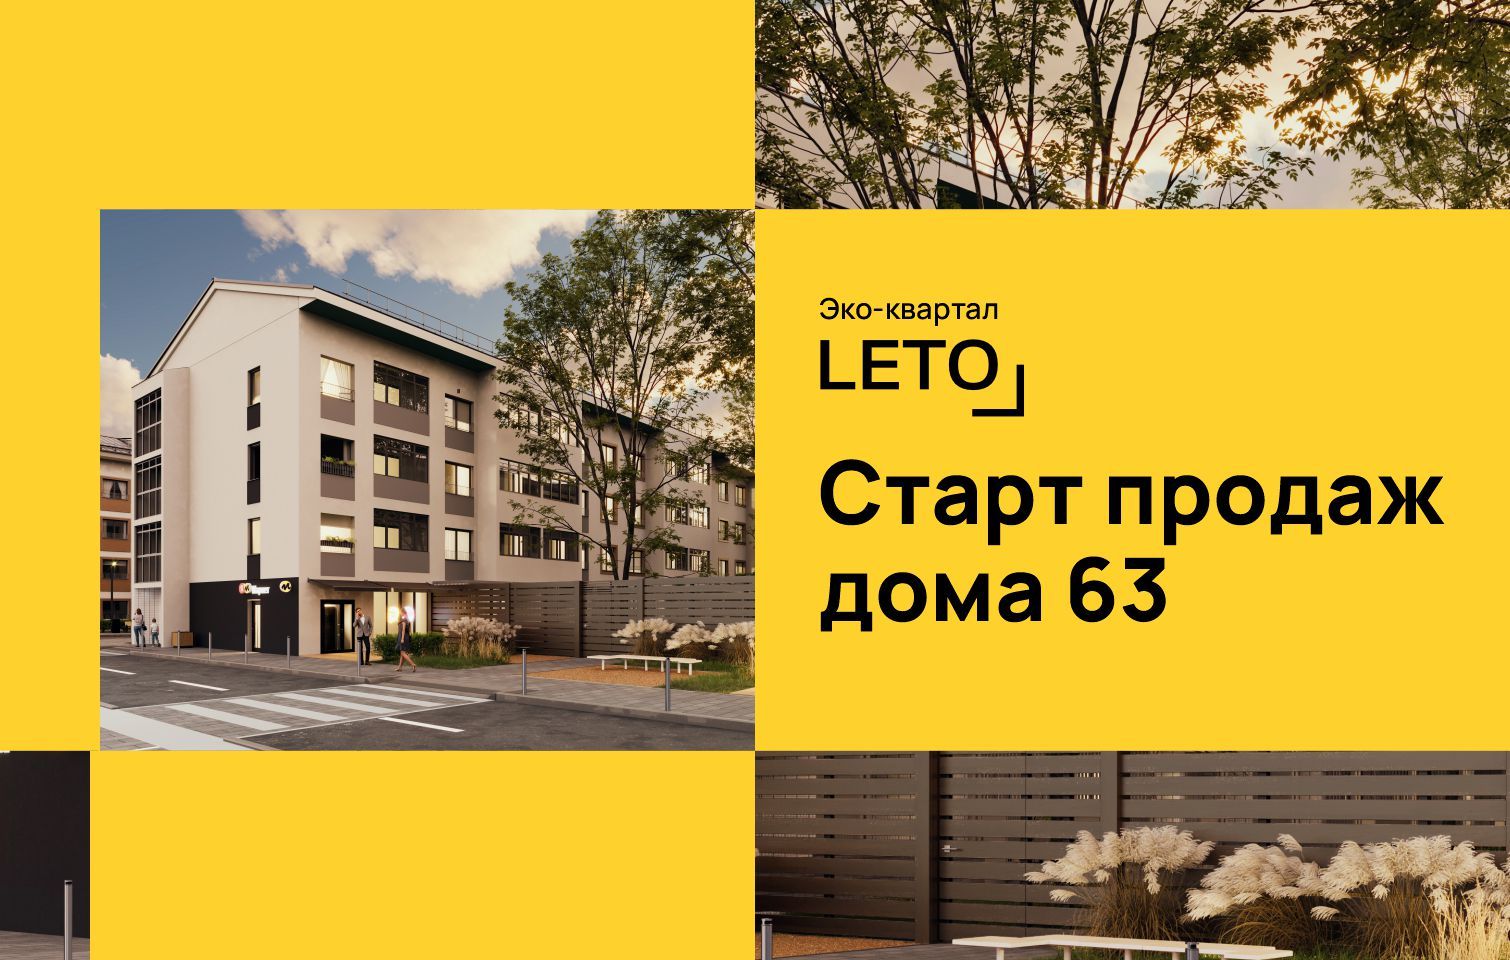 Старт продаж нового дома в эко-квартале LETO